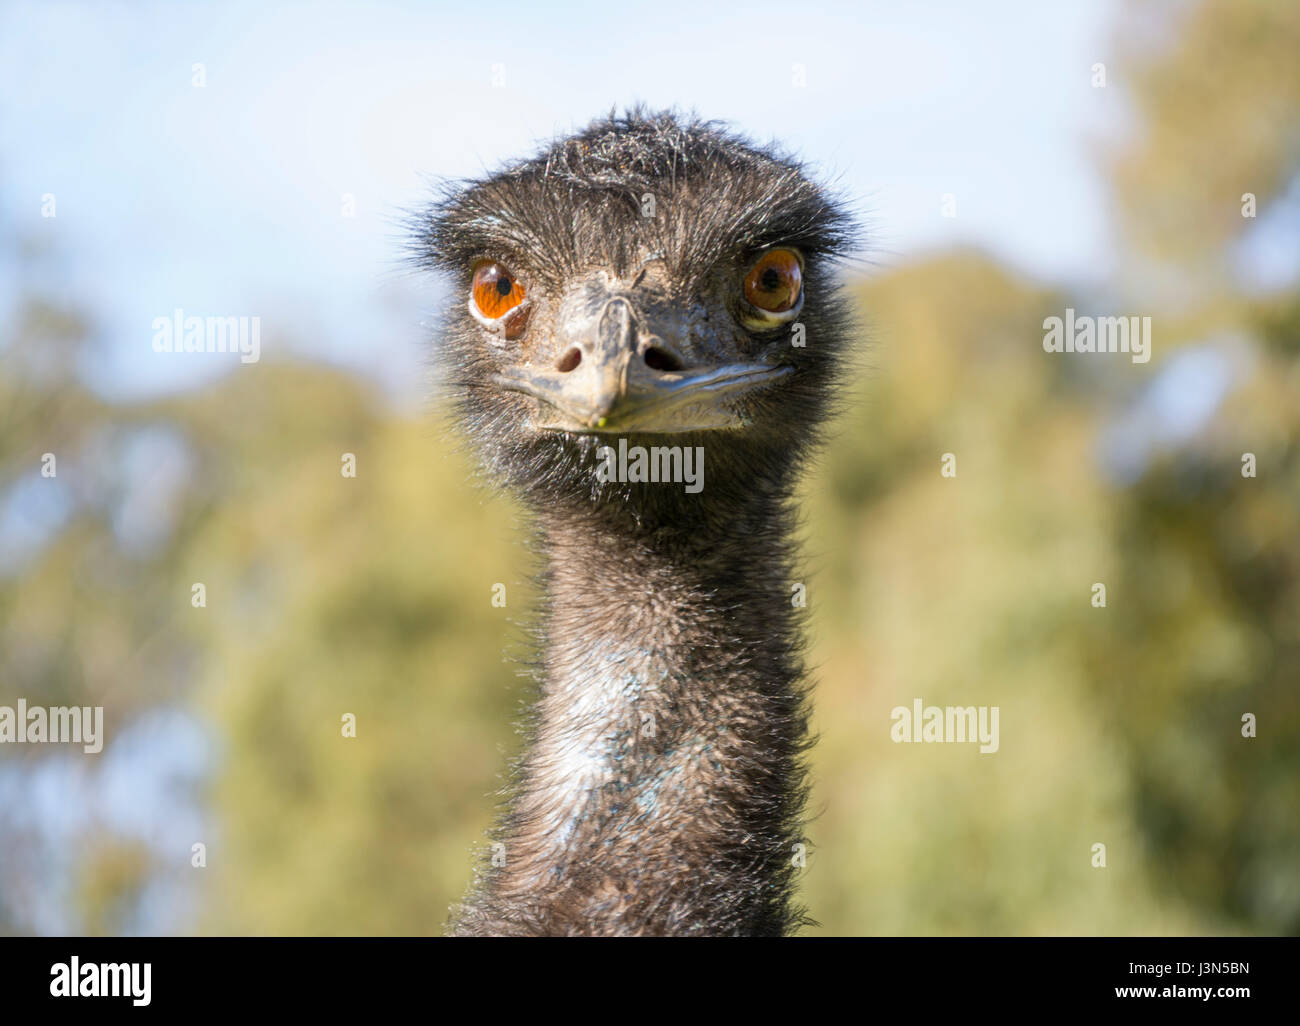 Australian Emu (Dromaius Novaehollandiae) head shot only with very shallow focus depth centred on the eyes. Stock Photo